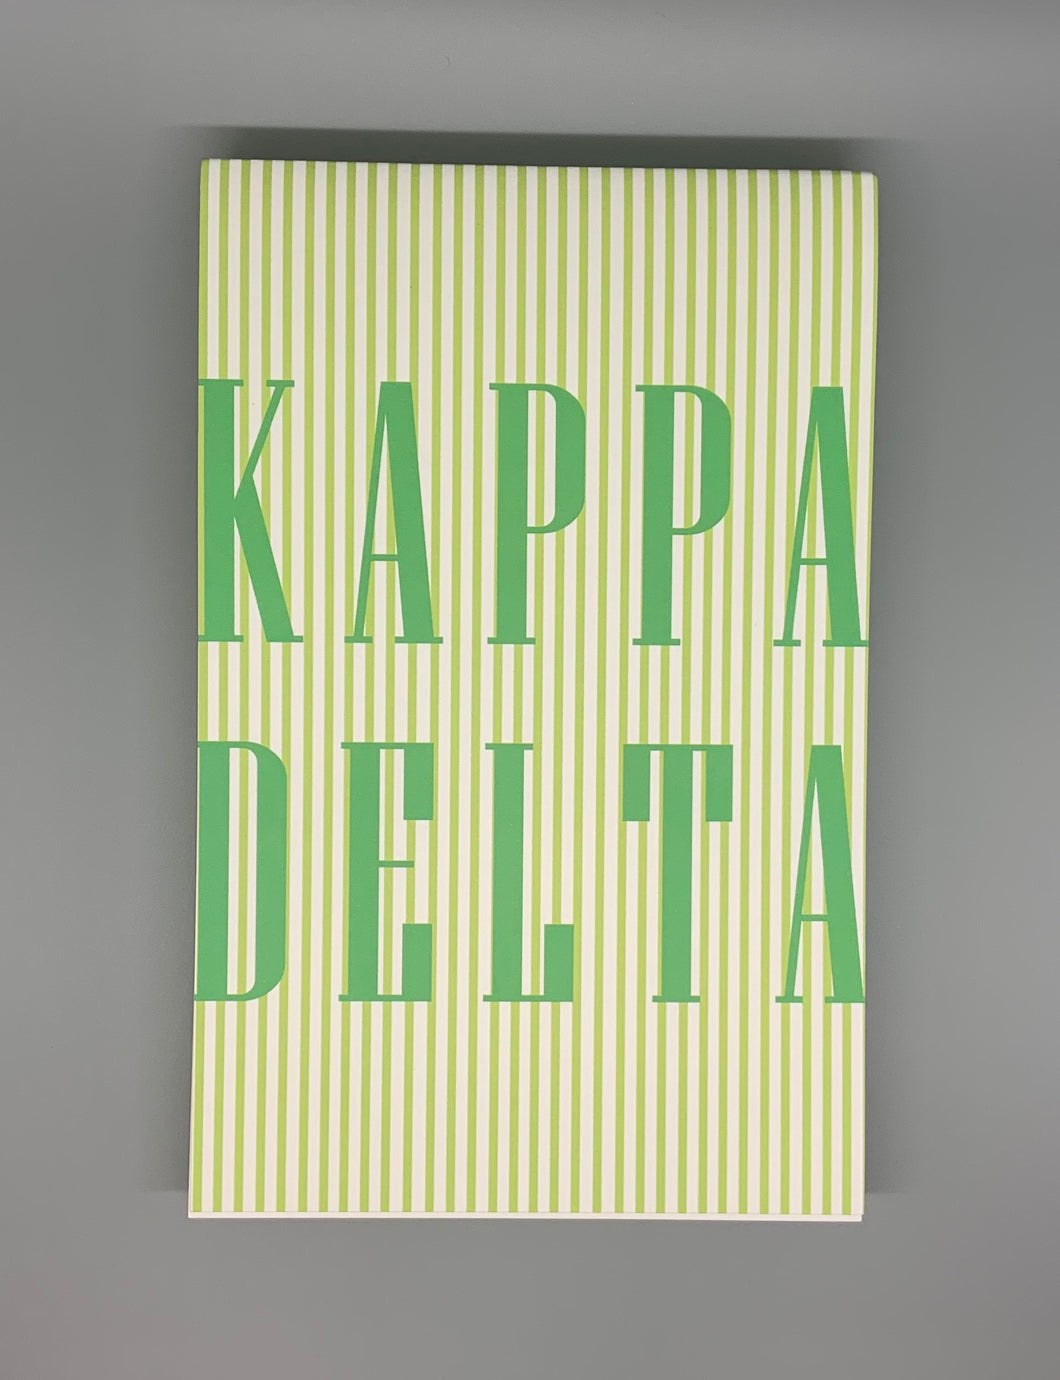 Kappa Delta Notepad